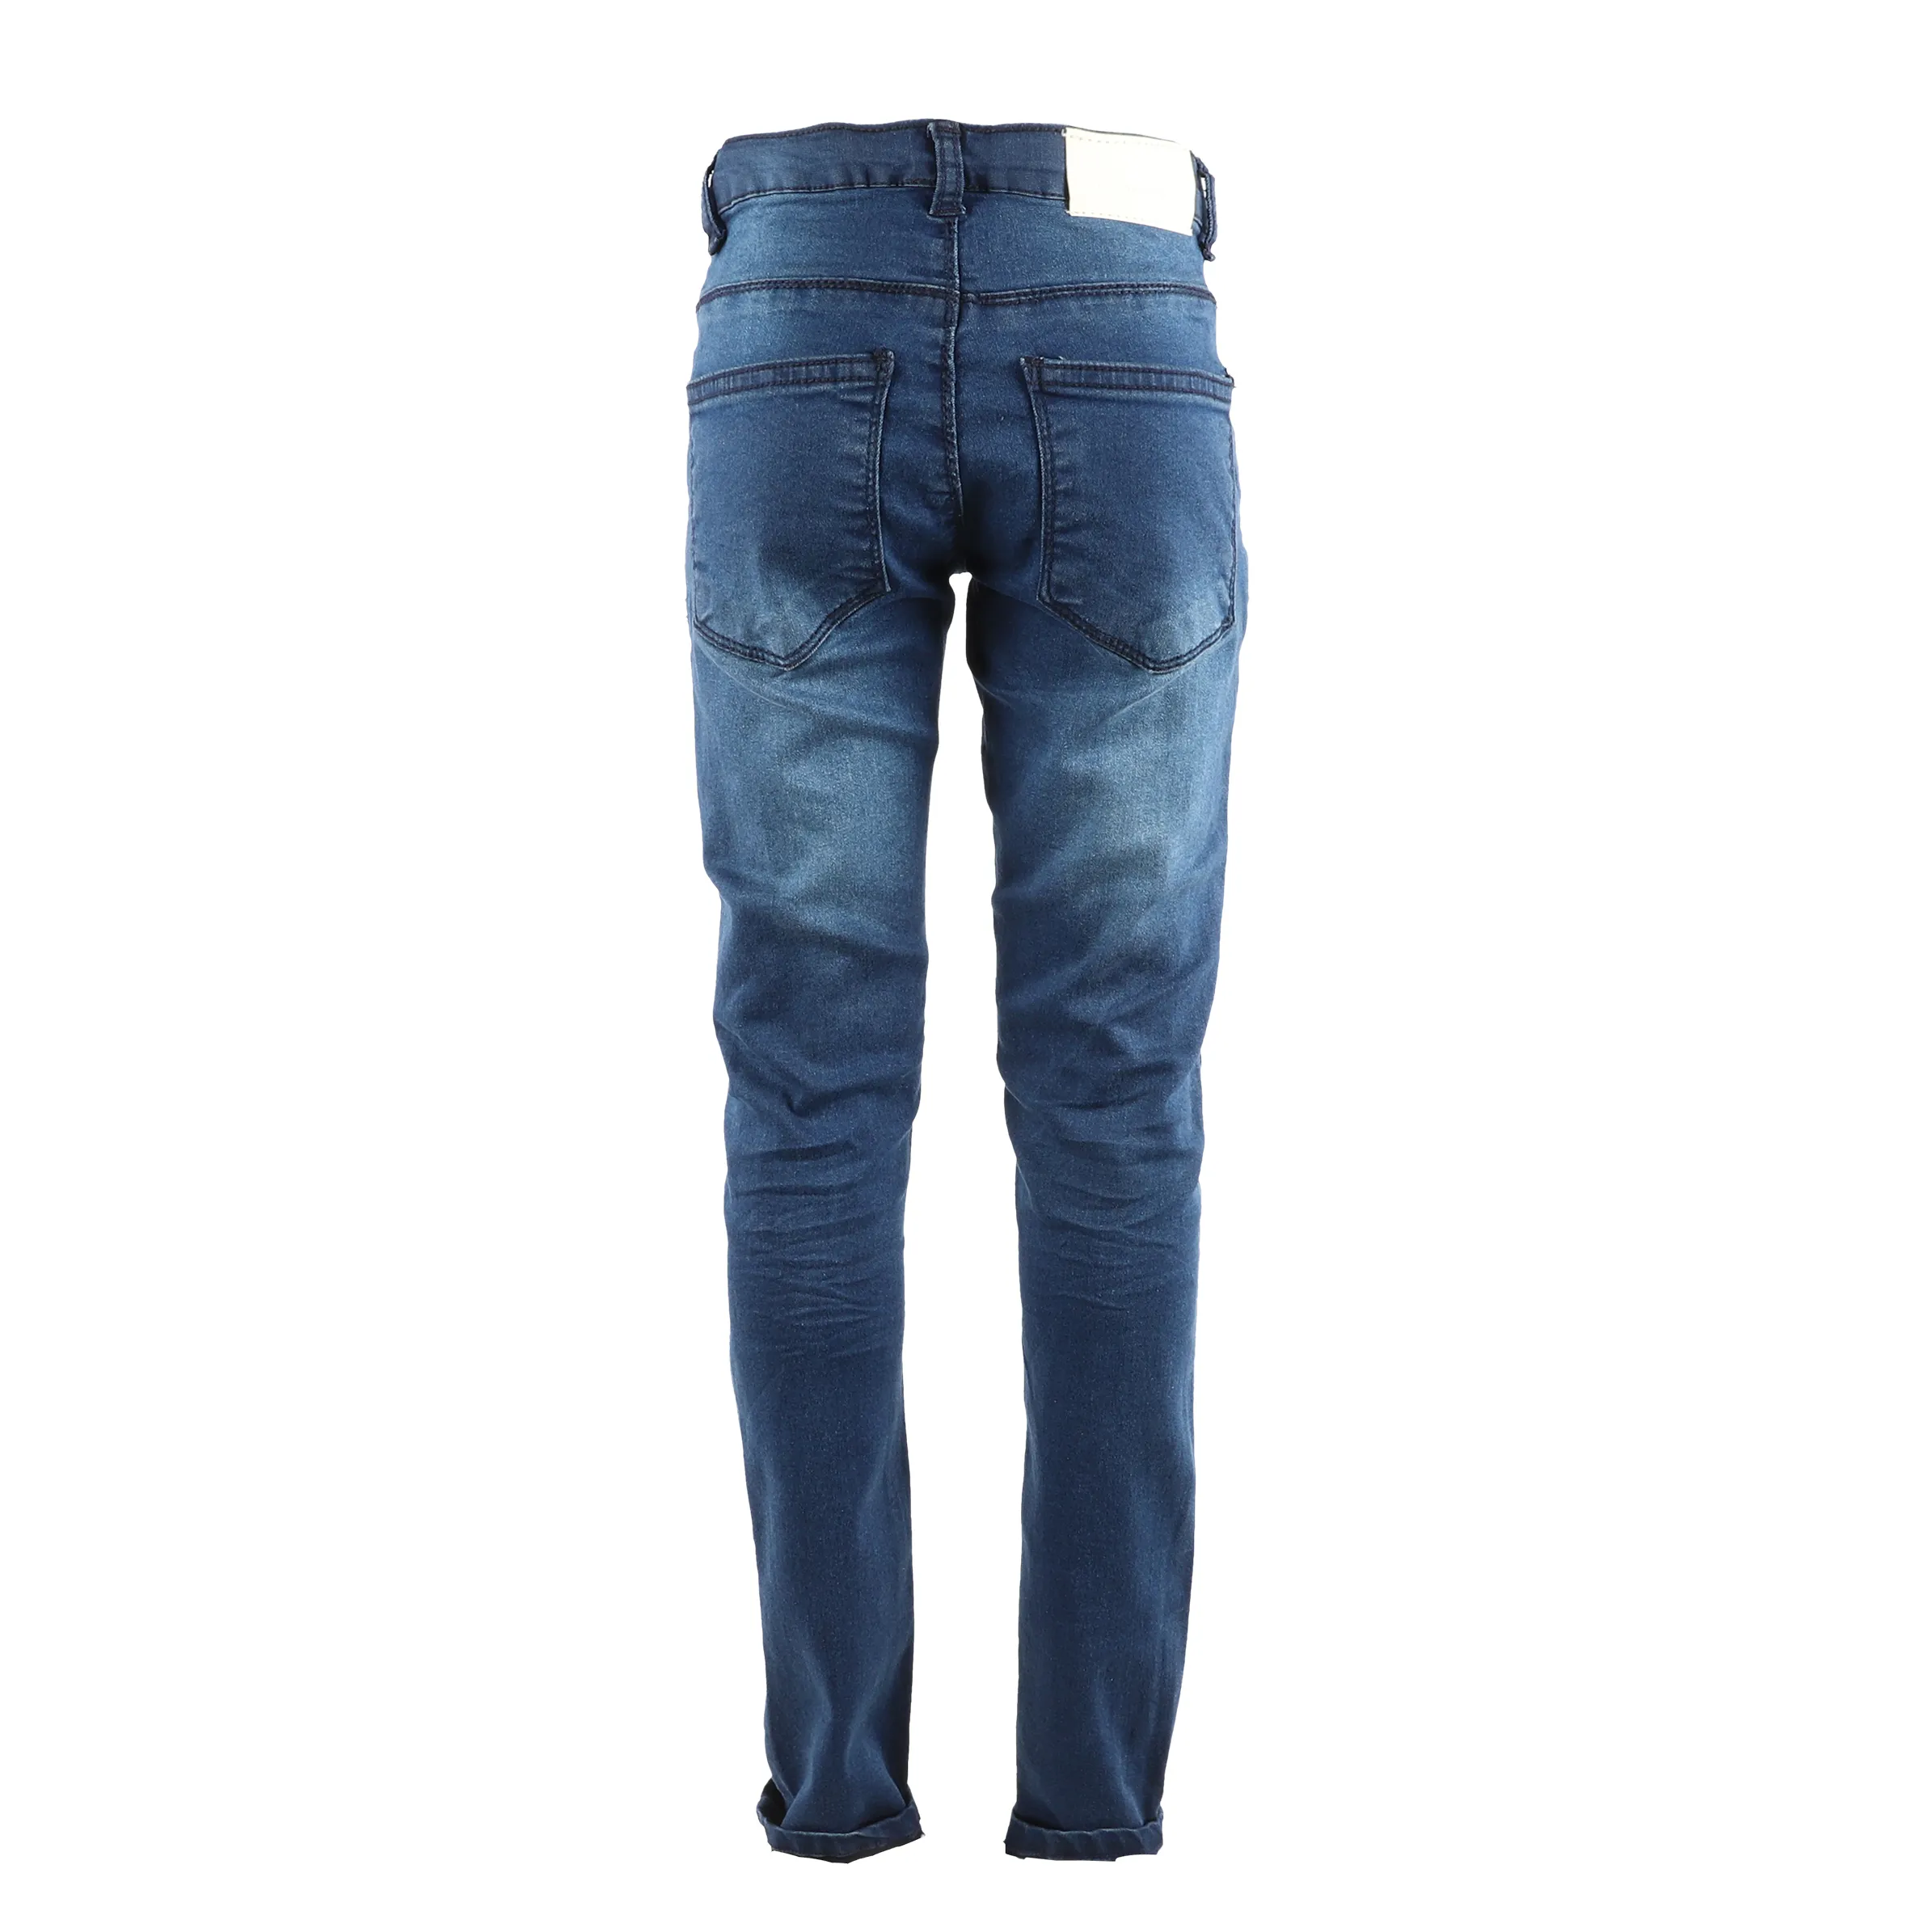 Stop + Go JM Jeans skinny mit kontrastnähten in midblue Blau 890801 MITTELBLAU 2